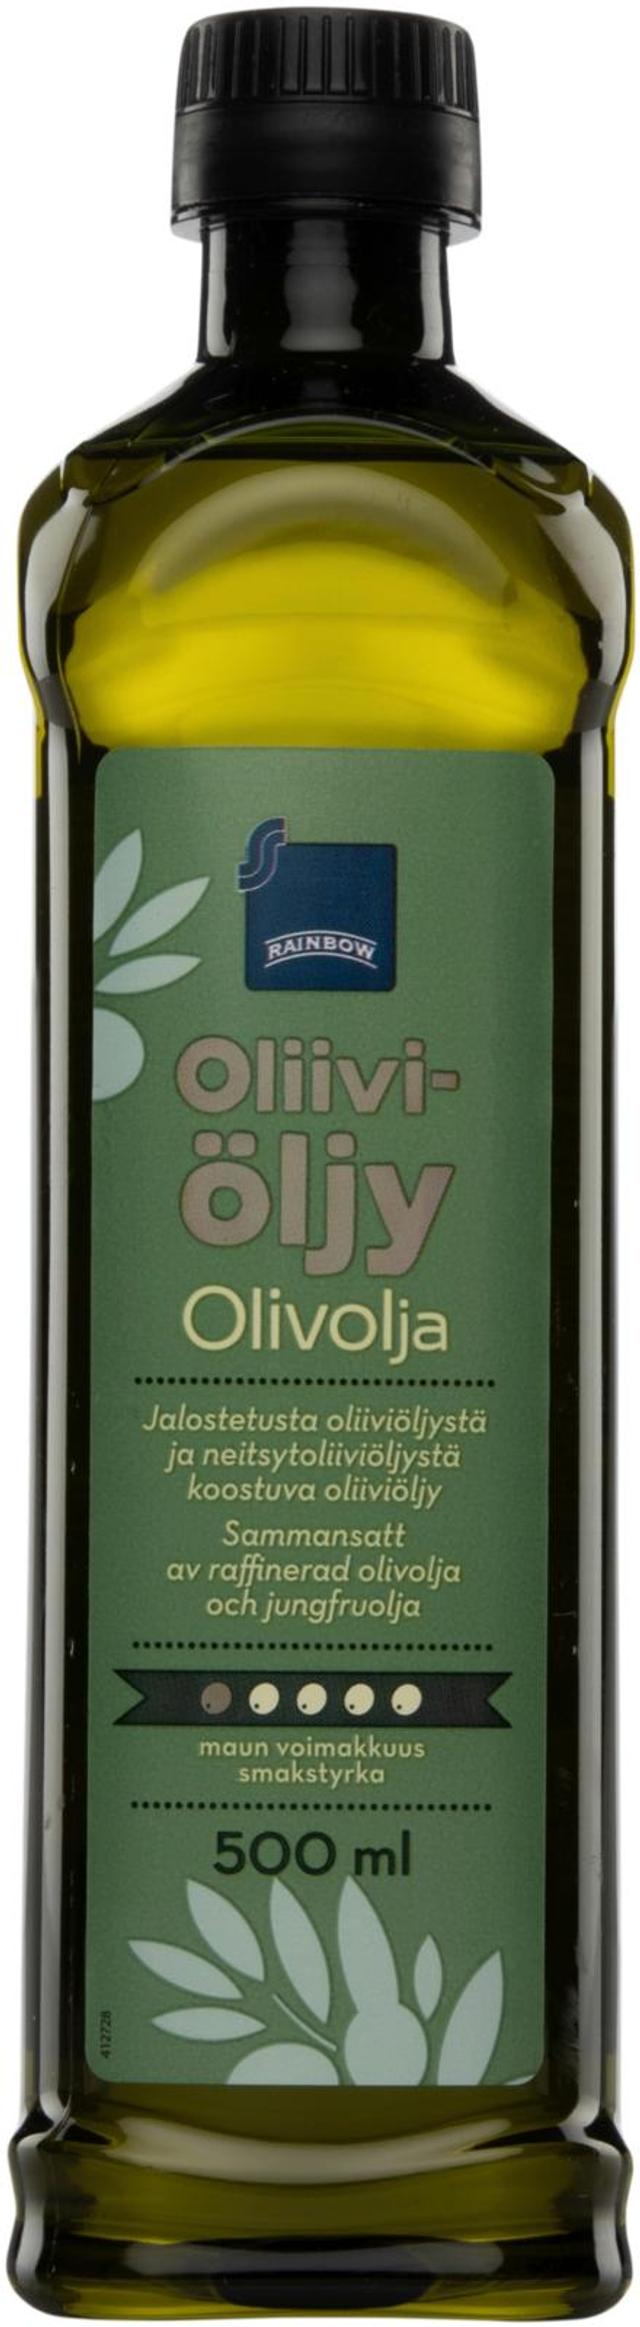 Rainbow oliiviöljy 500ml